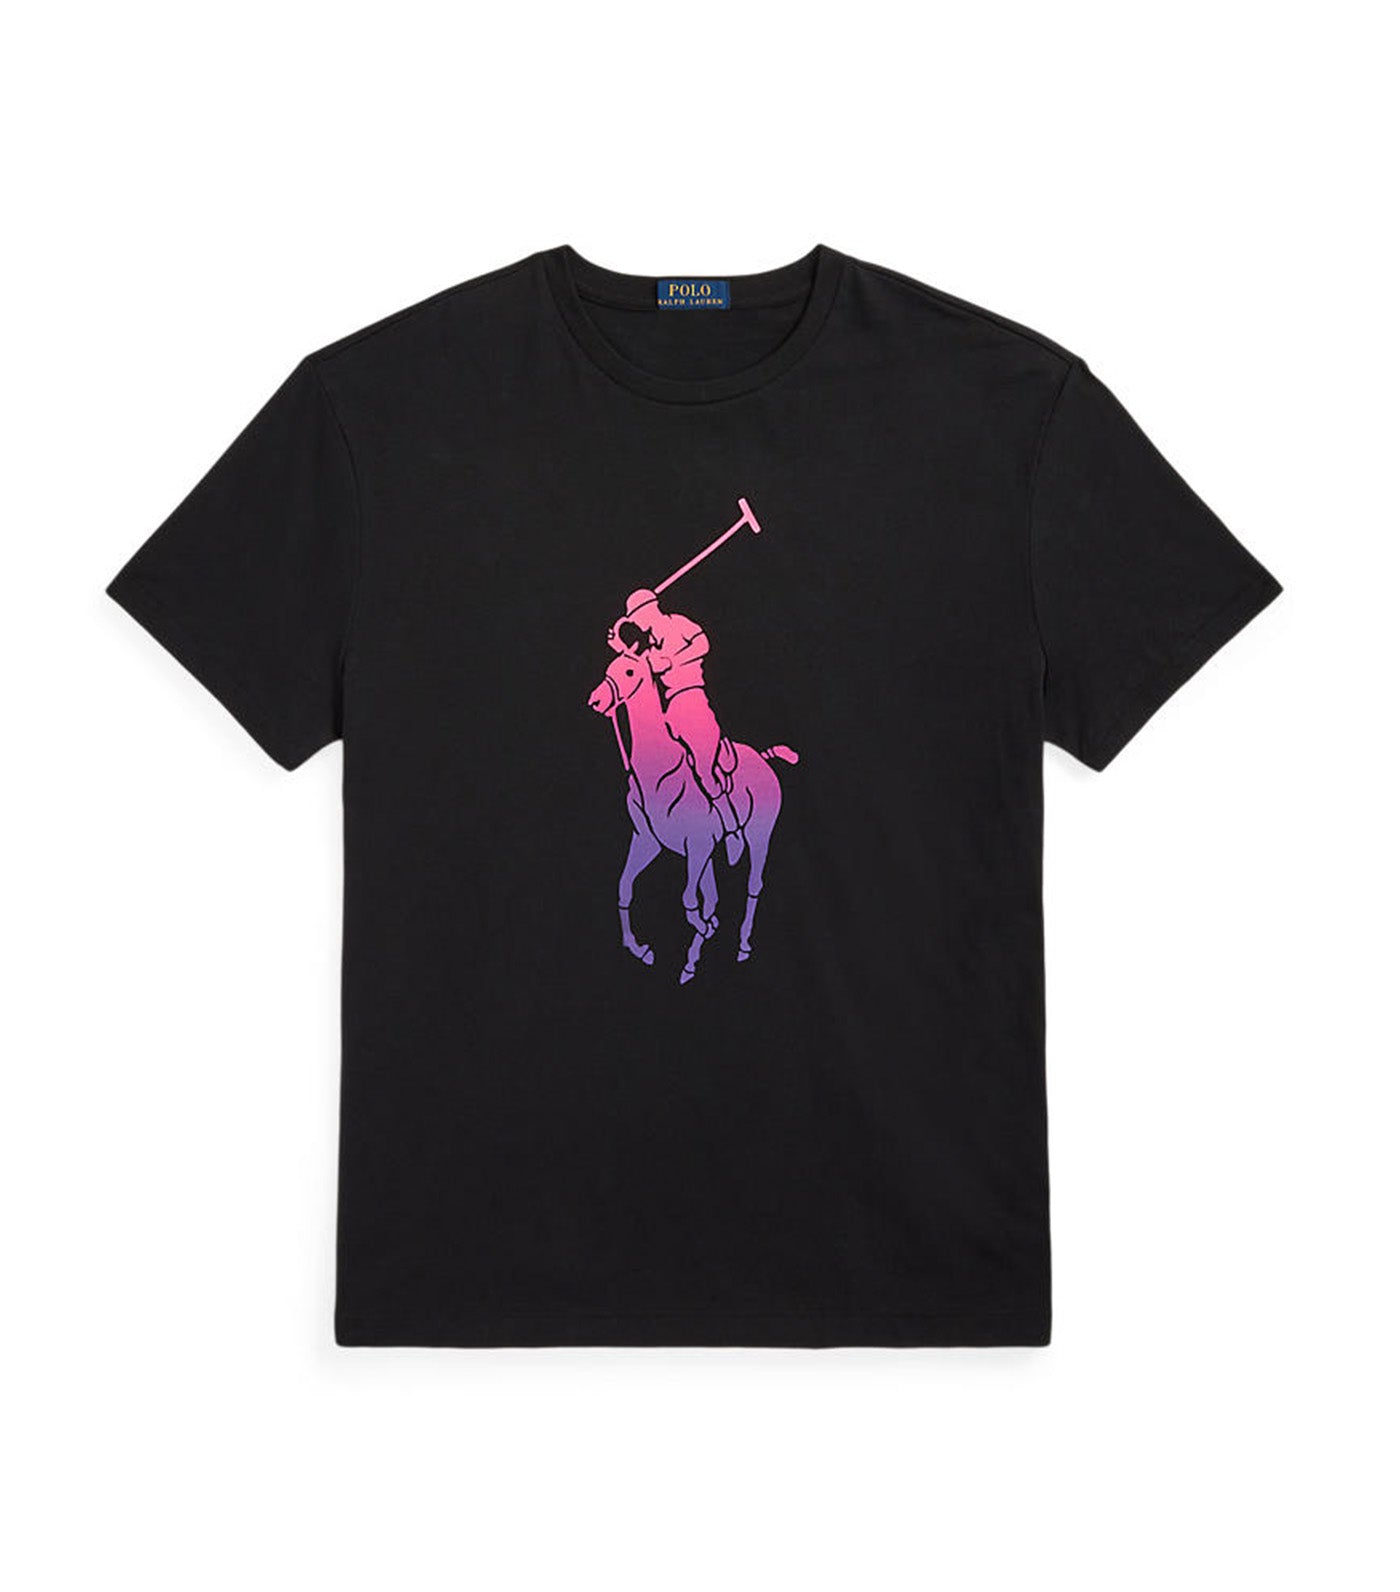 Men’s Classic Fit Big Pony Jersey T-Shirt Black